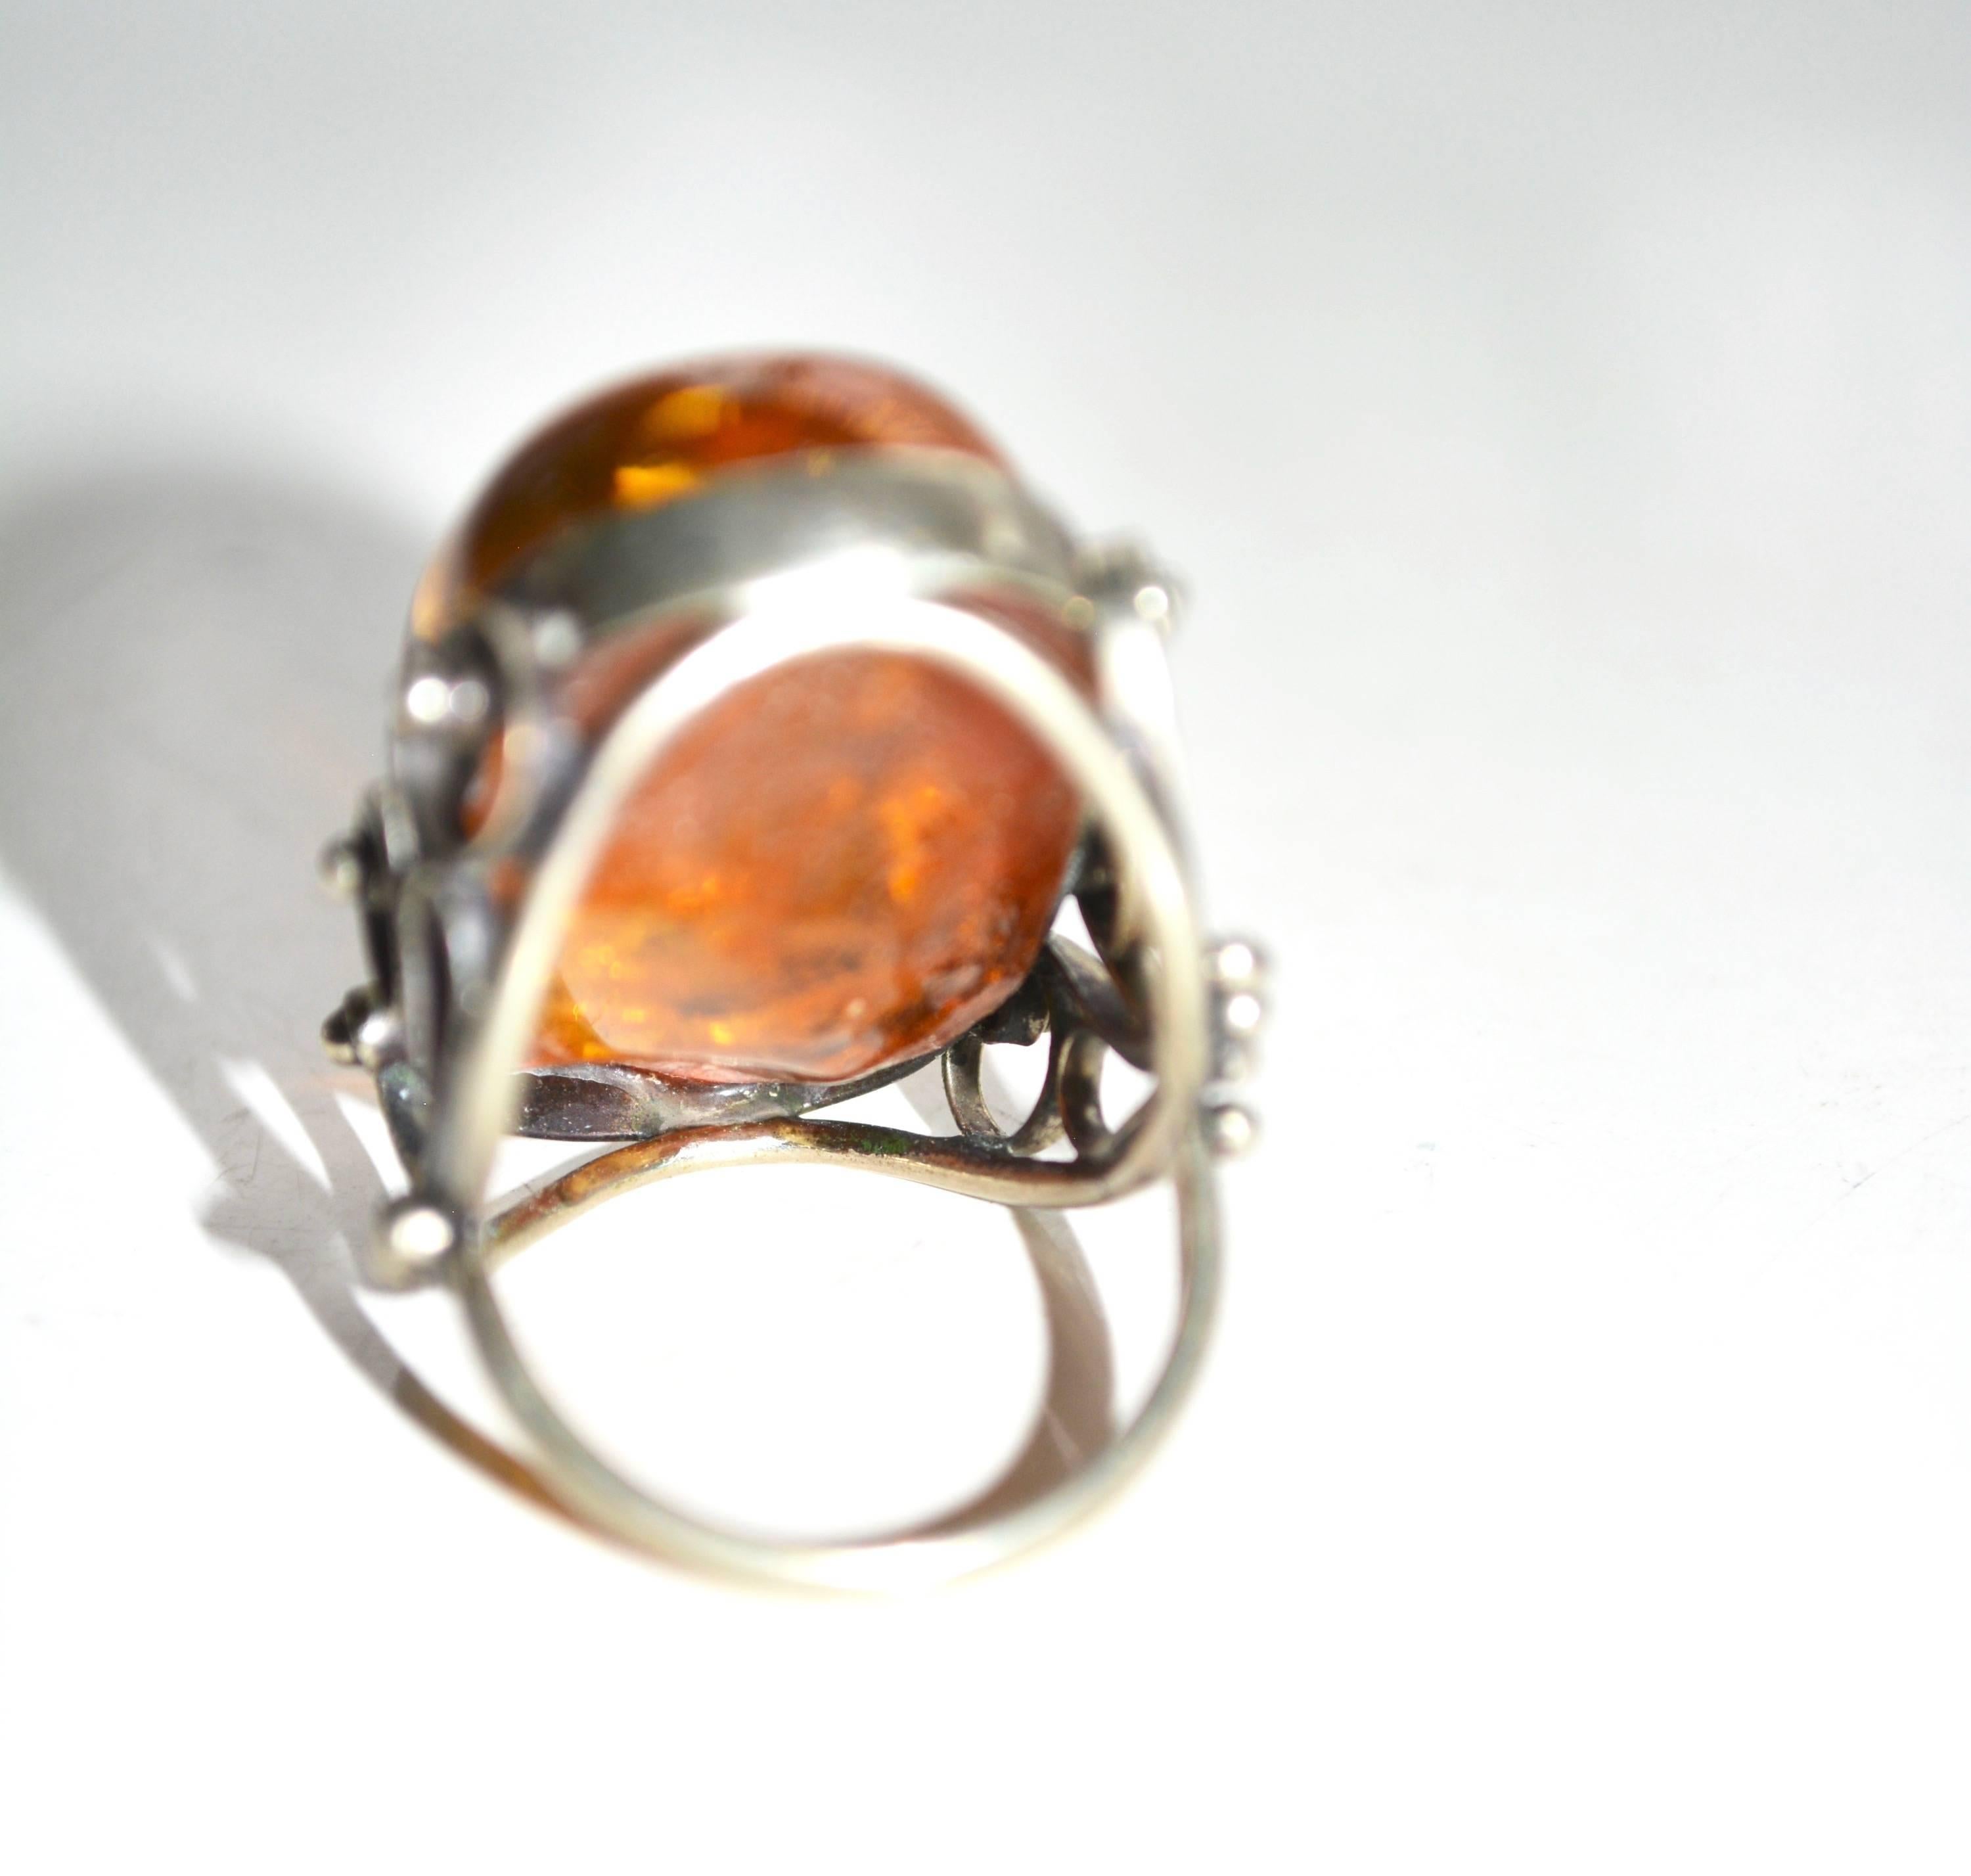 latvian wedding ring